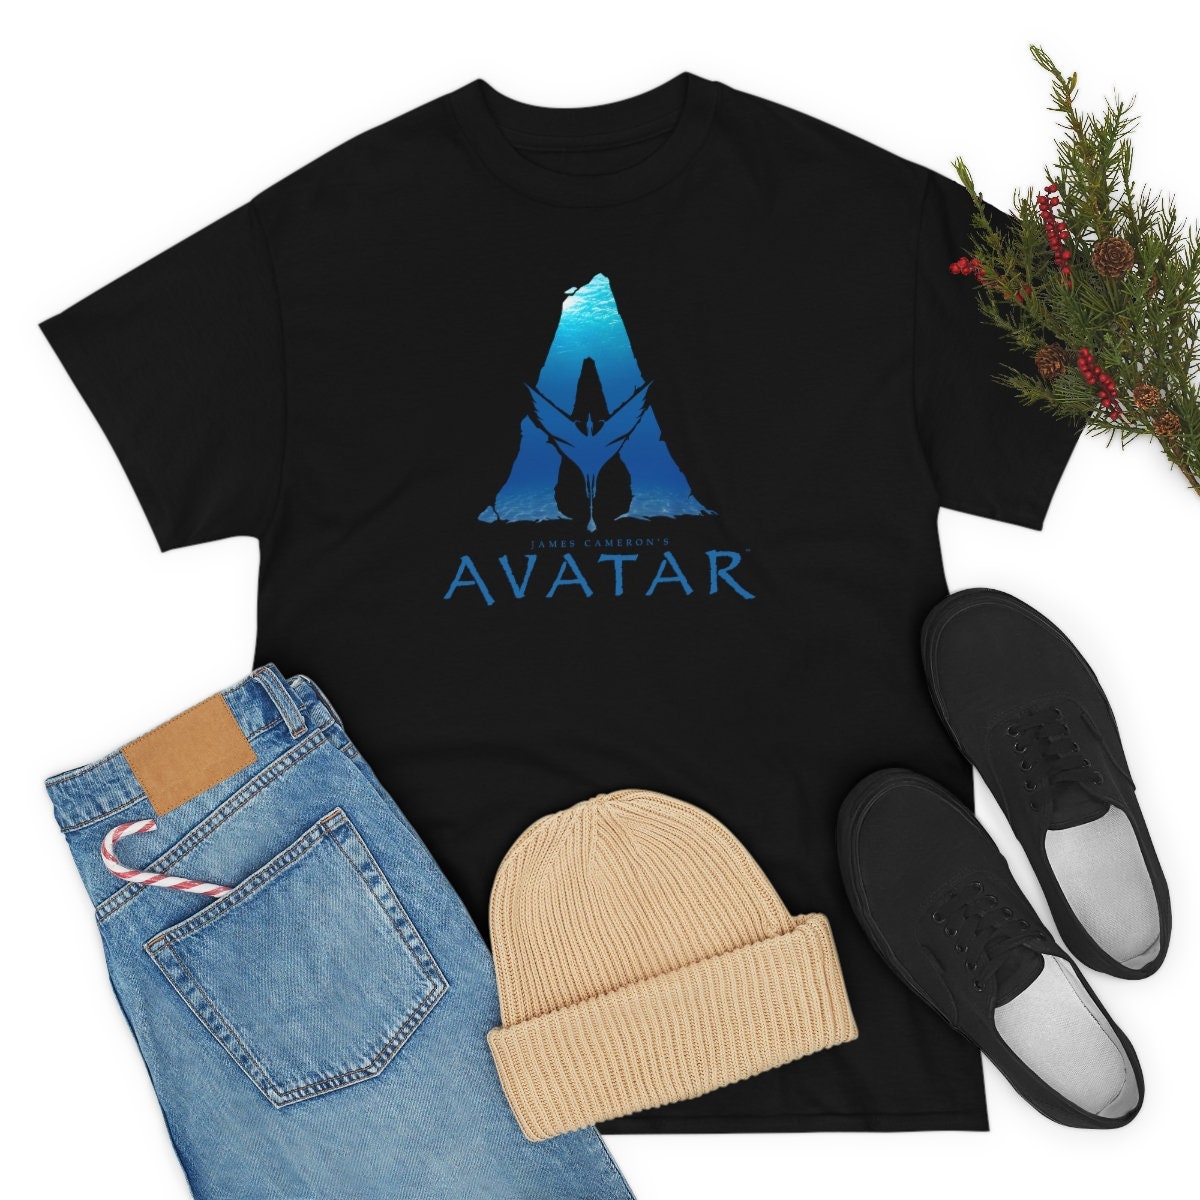 Avatar T Shirt - Avatar 2 Tee, Problem Solving, Avatar Gift, Present for Movie lover